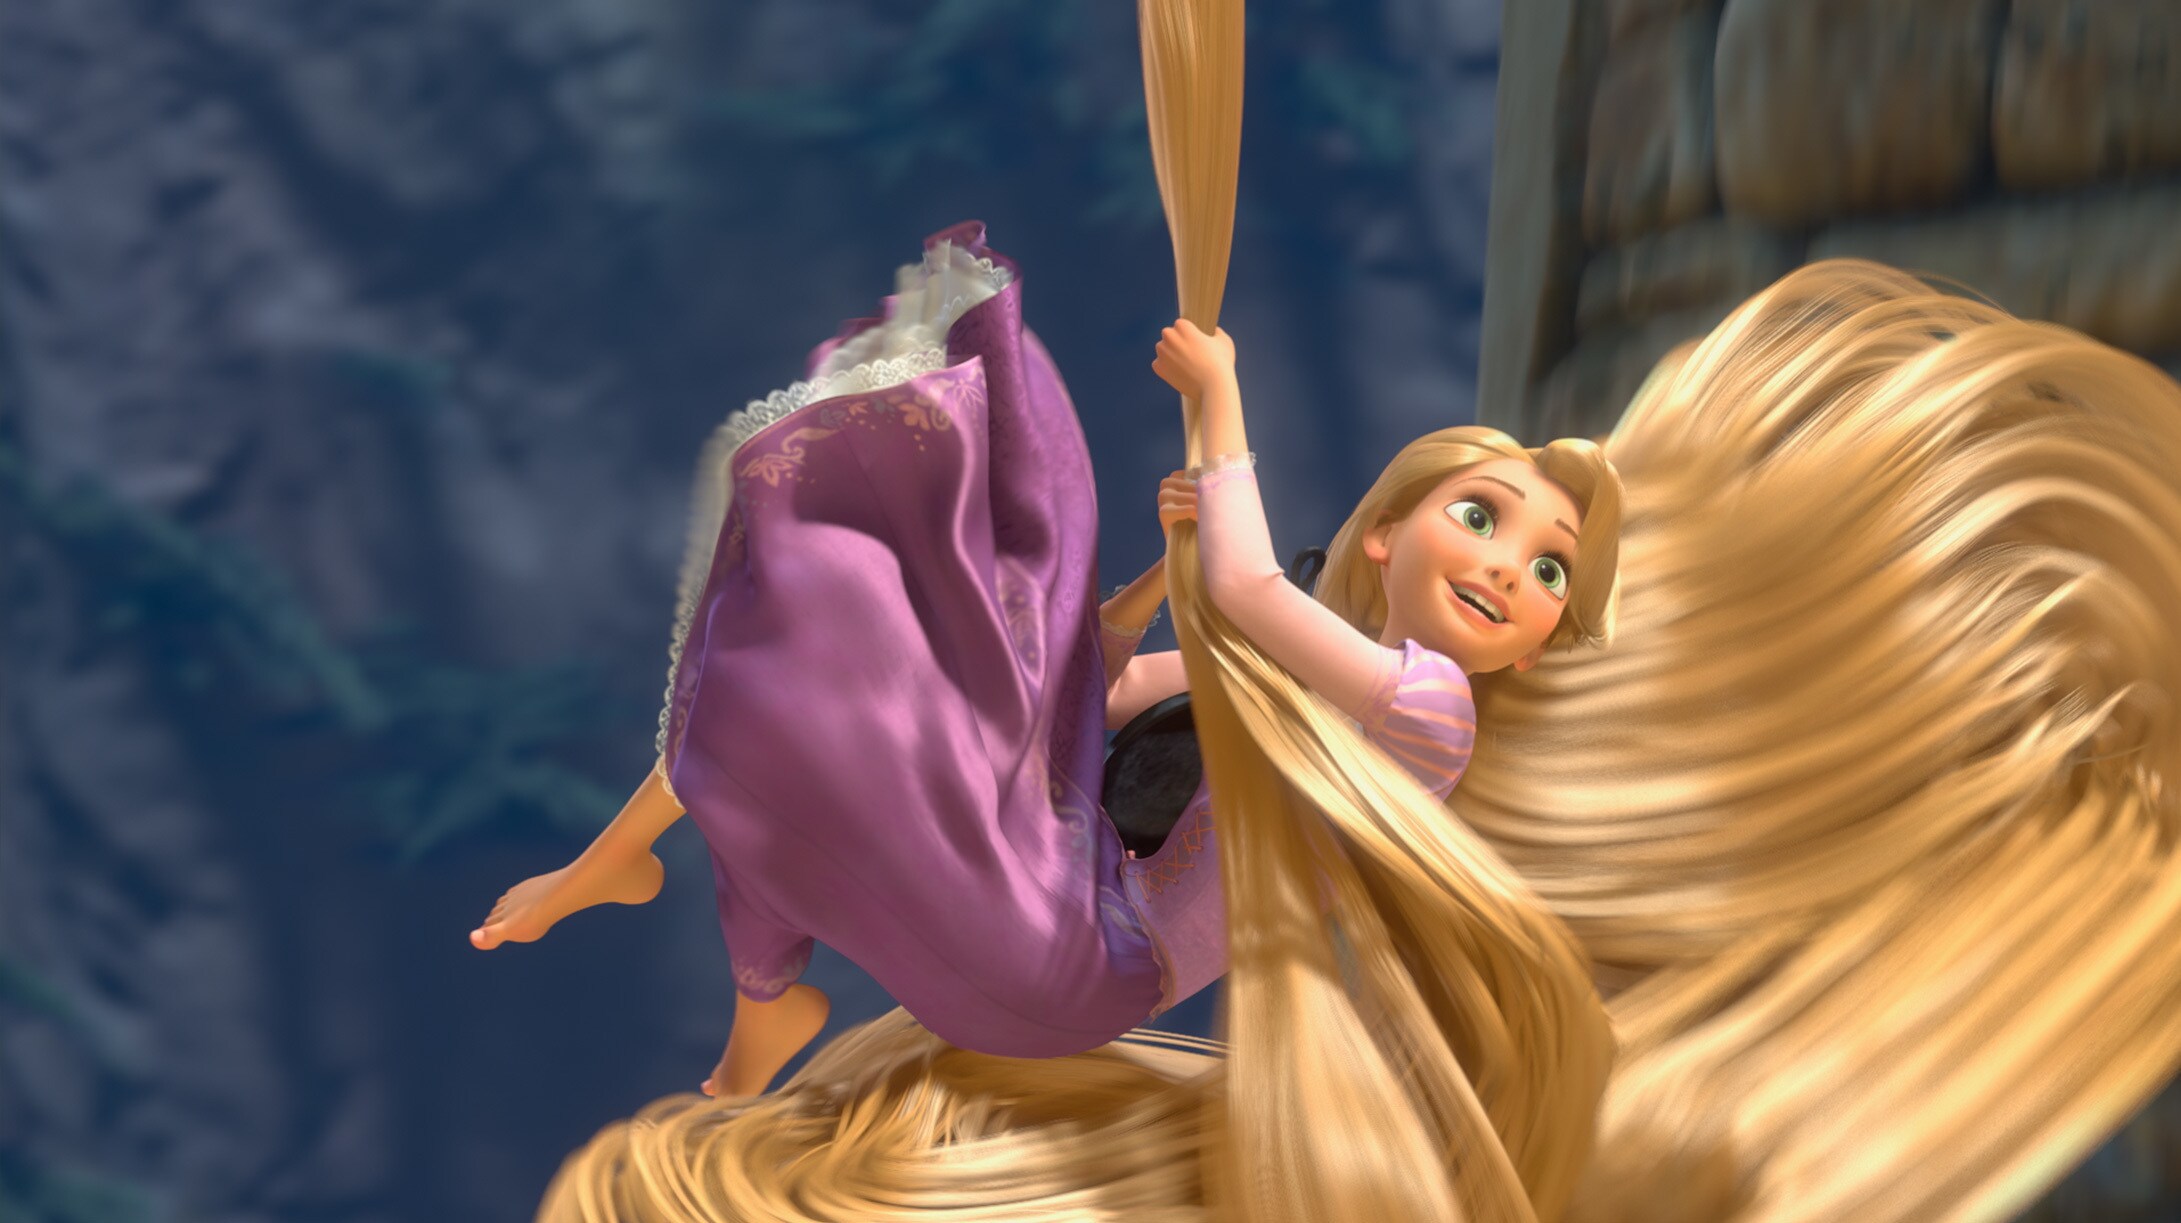 Disney Princess Rapunzel swinging on her hair